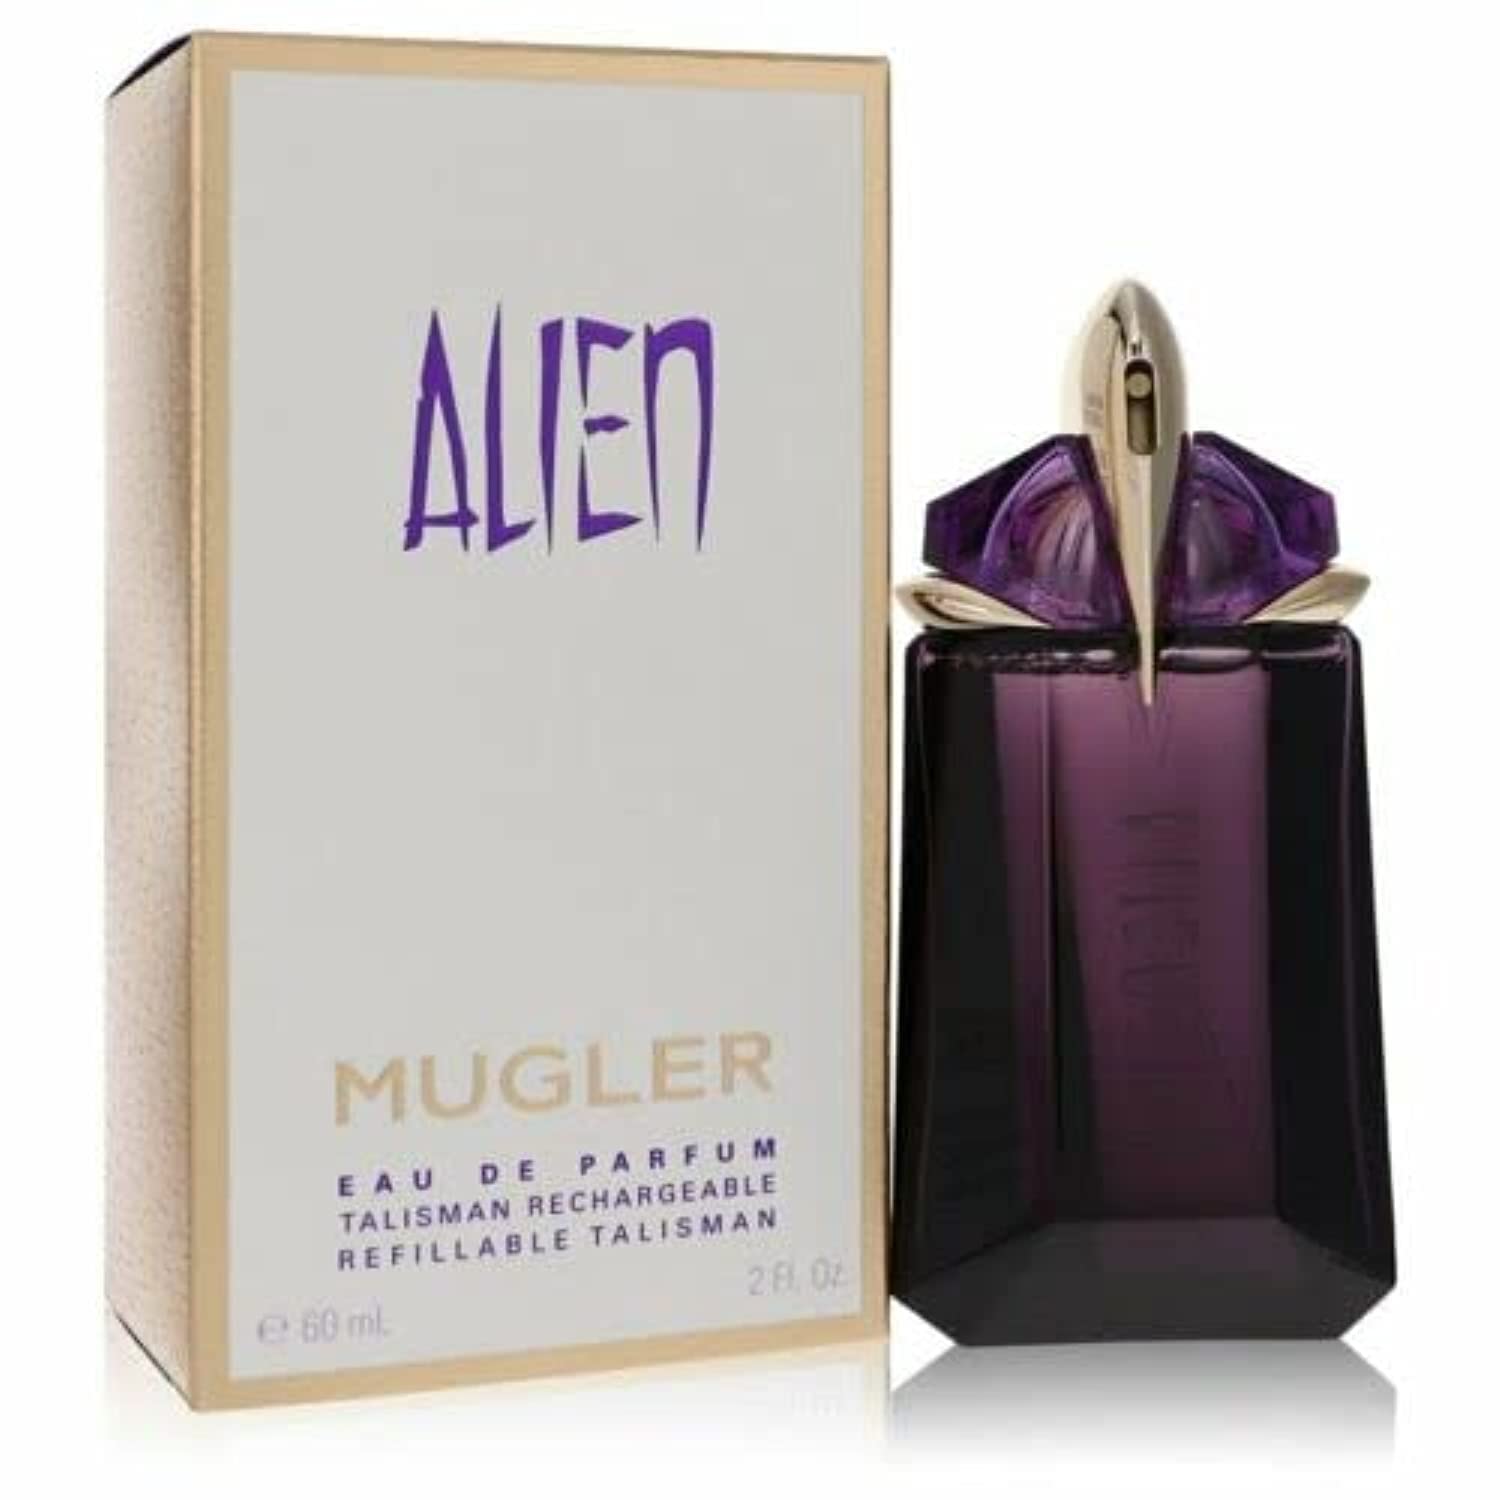 Alien Mugler Eau de Parfum 2.0 fl oz